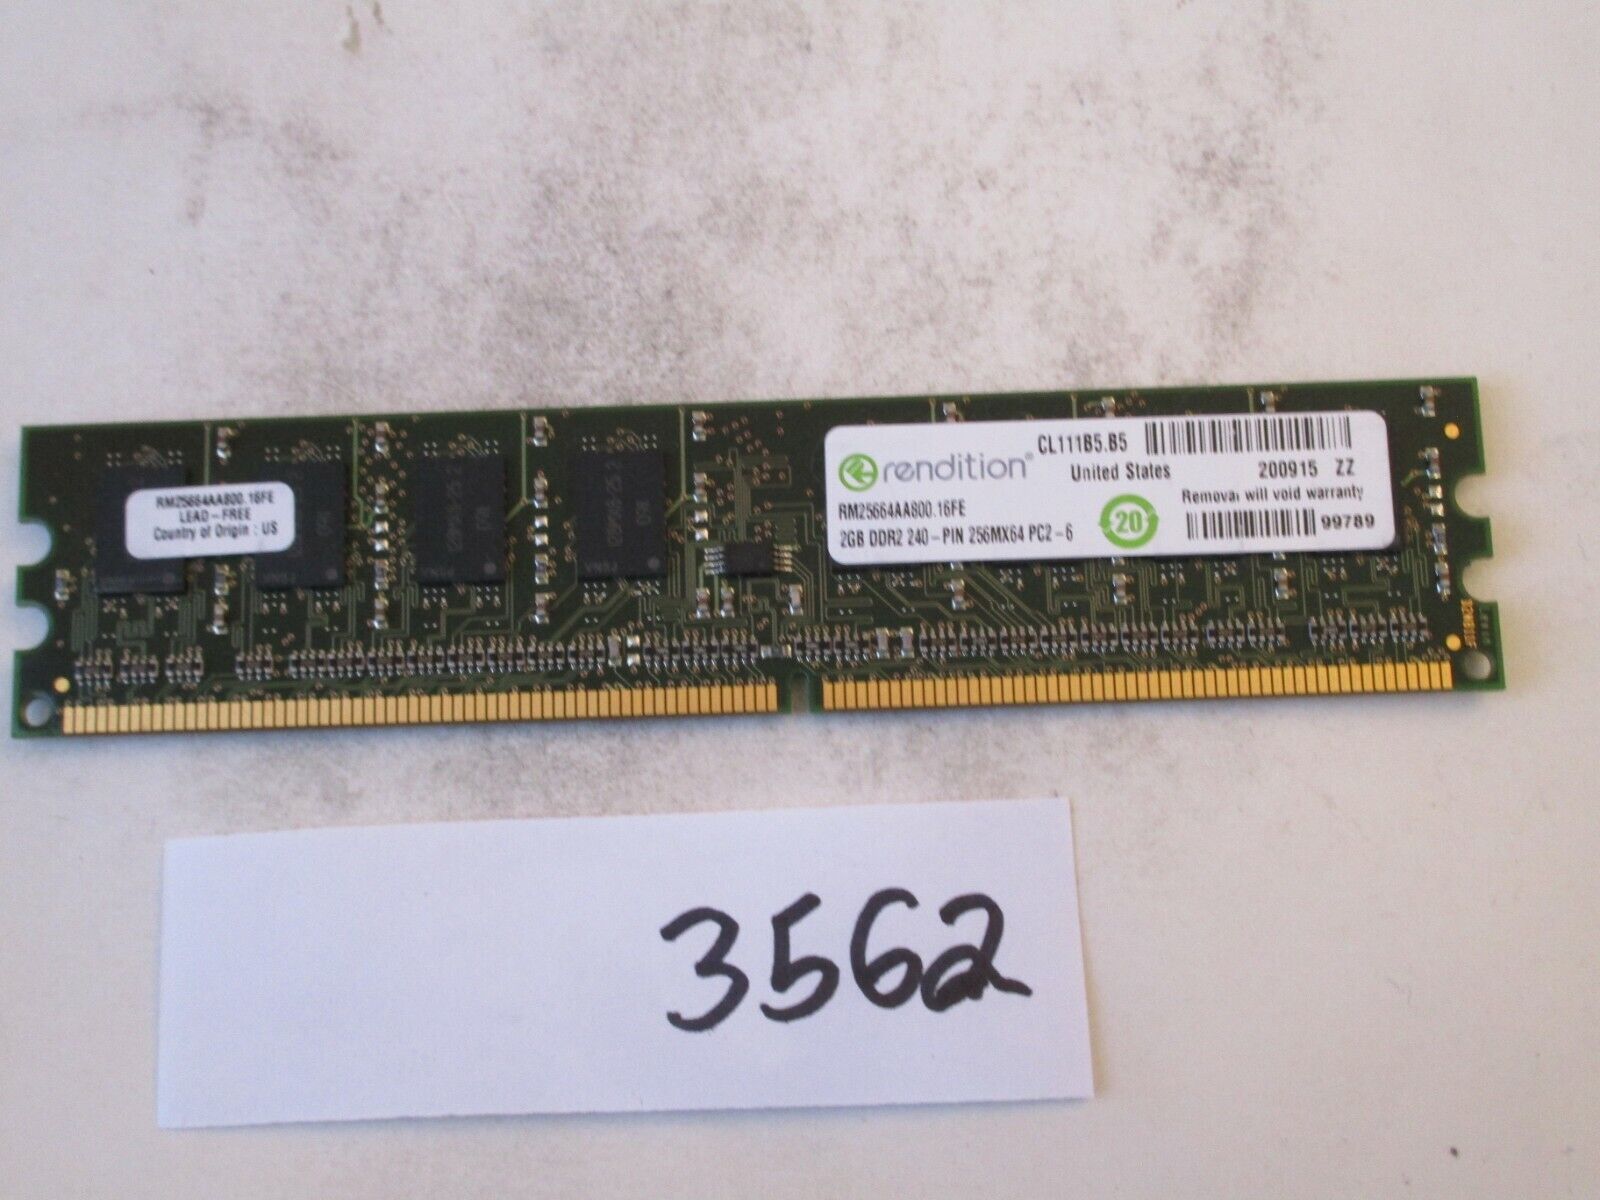 Rendition RM25664AA800.16FE 2Gb PC2-6400 800Mhz DDR2 Desktop Memory RAM (3562)